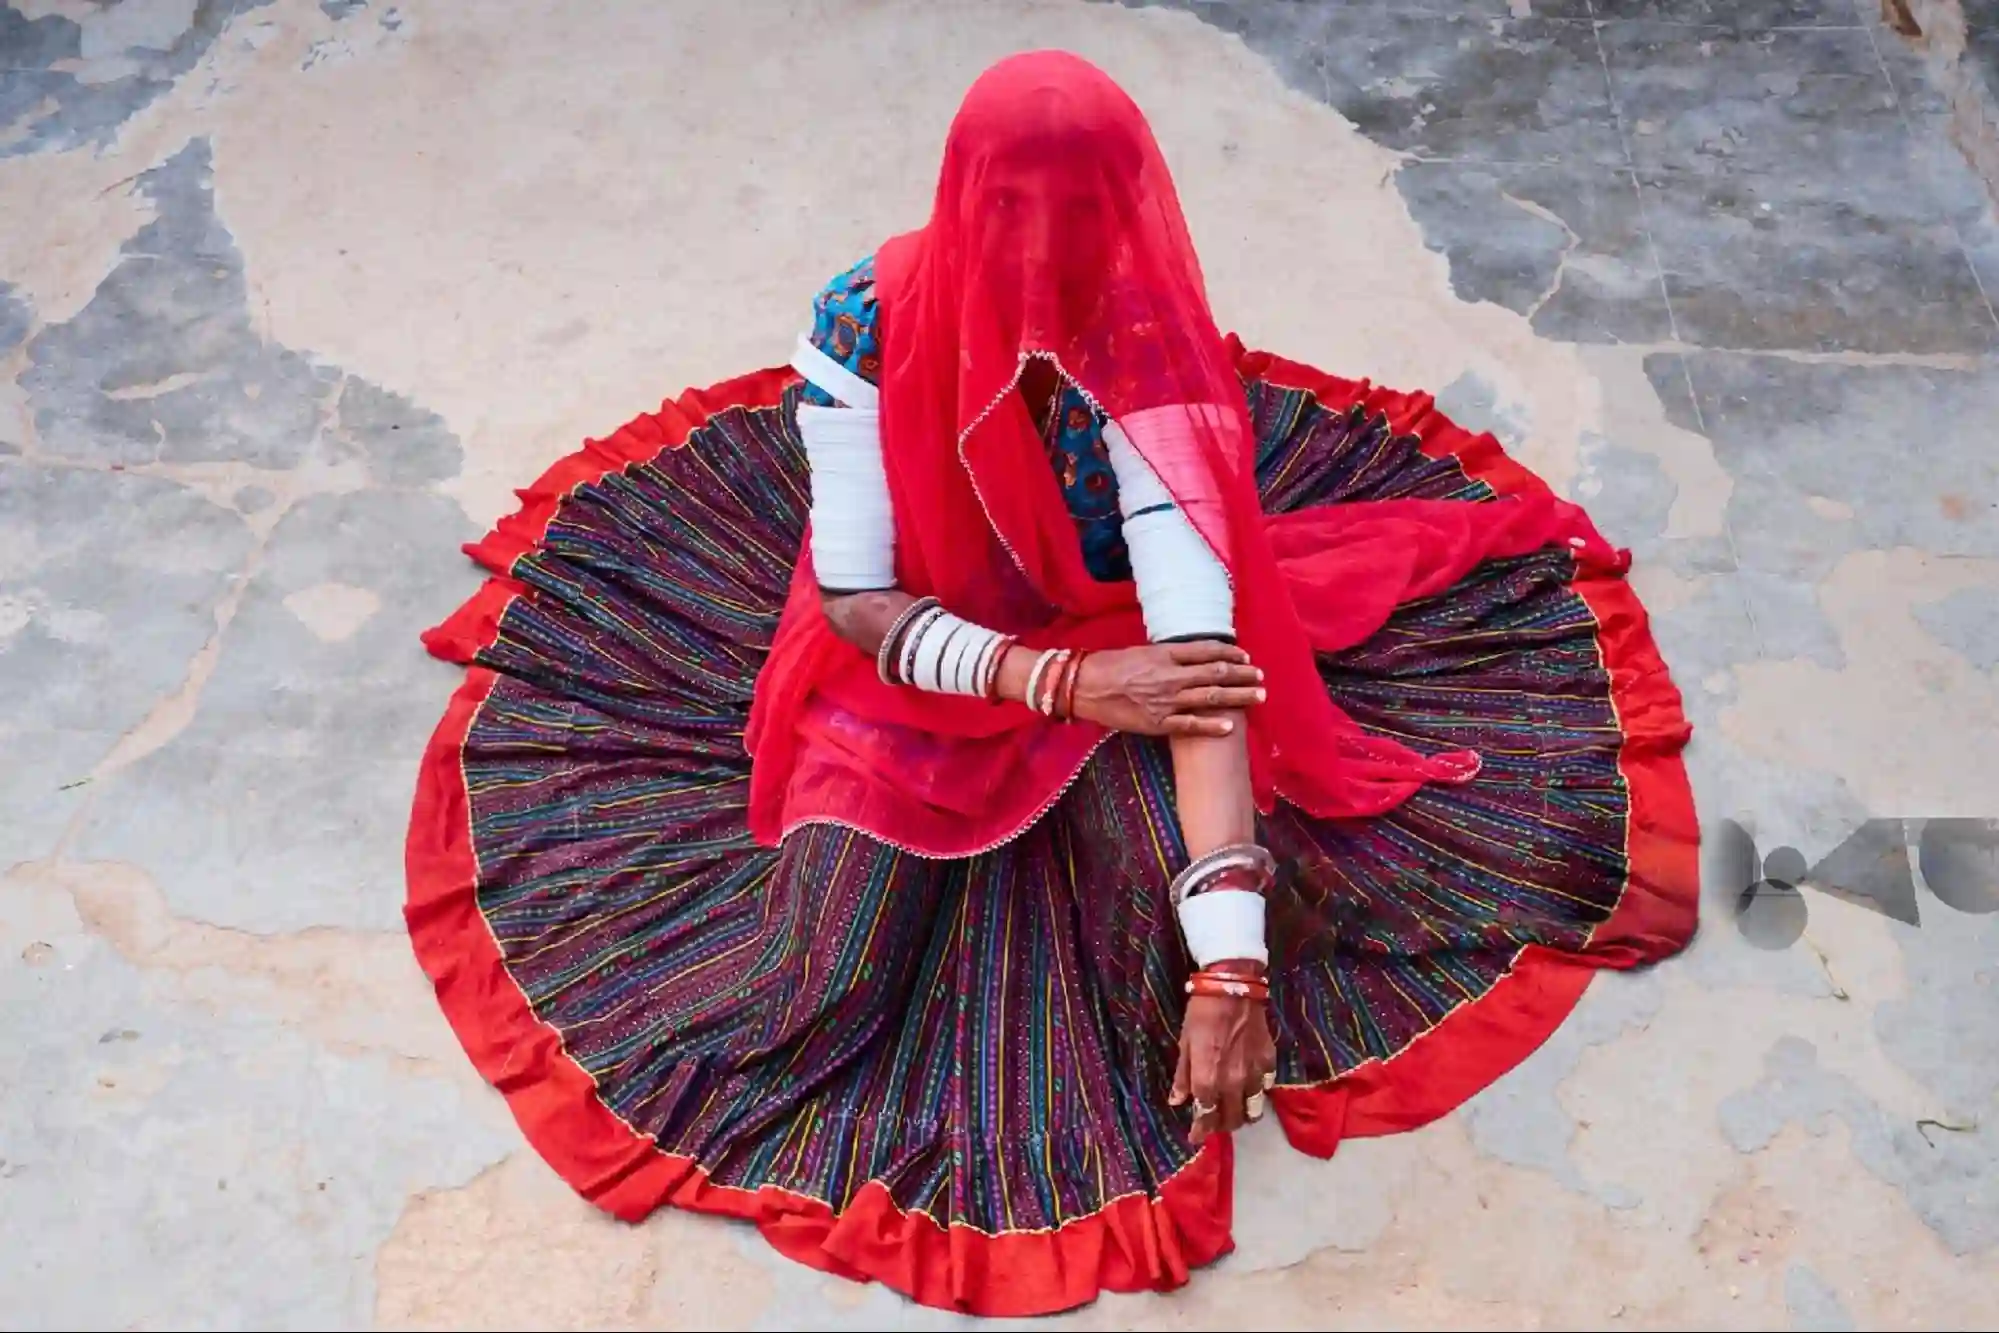 Traditional Rajasthani dress of women